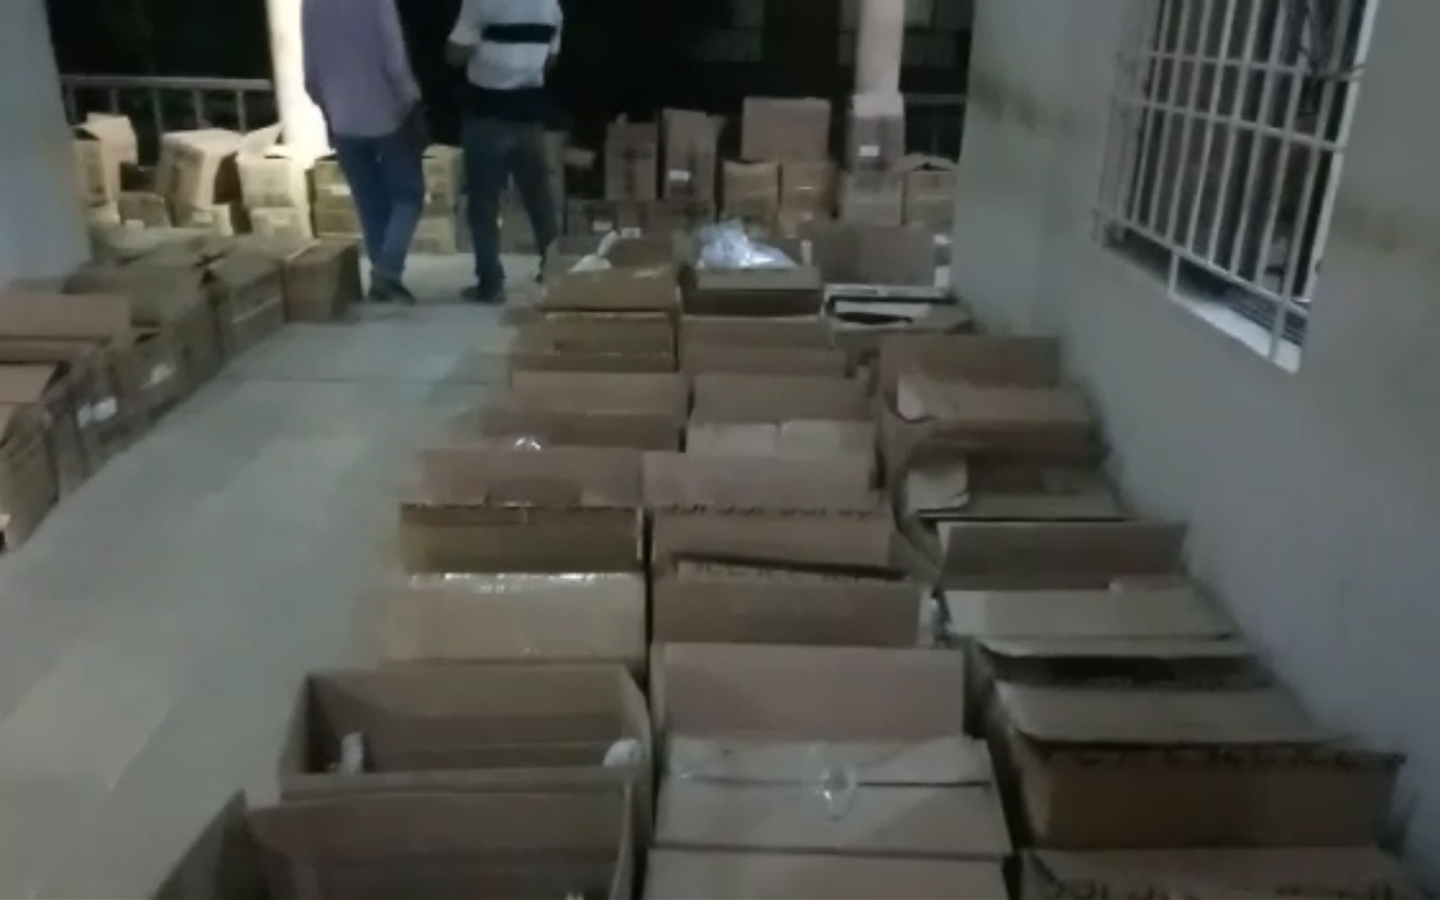 Over five tonnes of drugs seized during raid in Manghupir